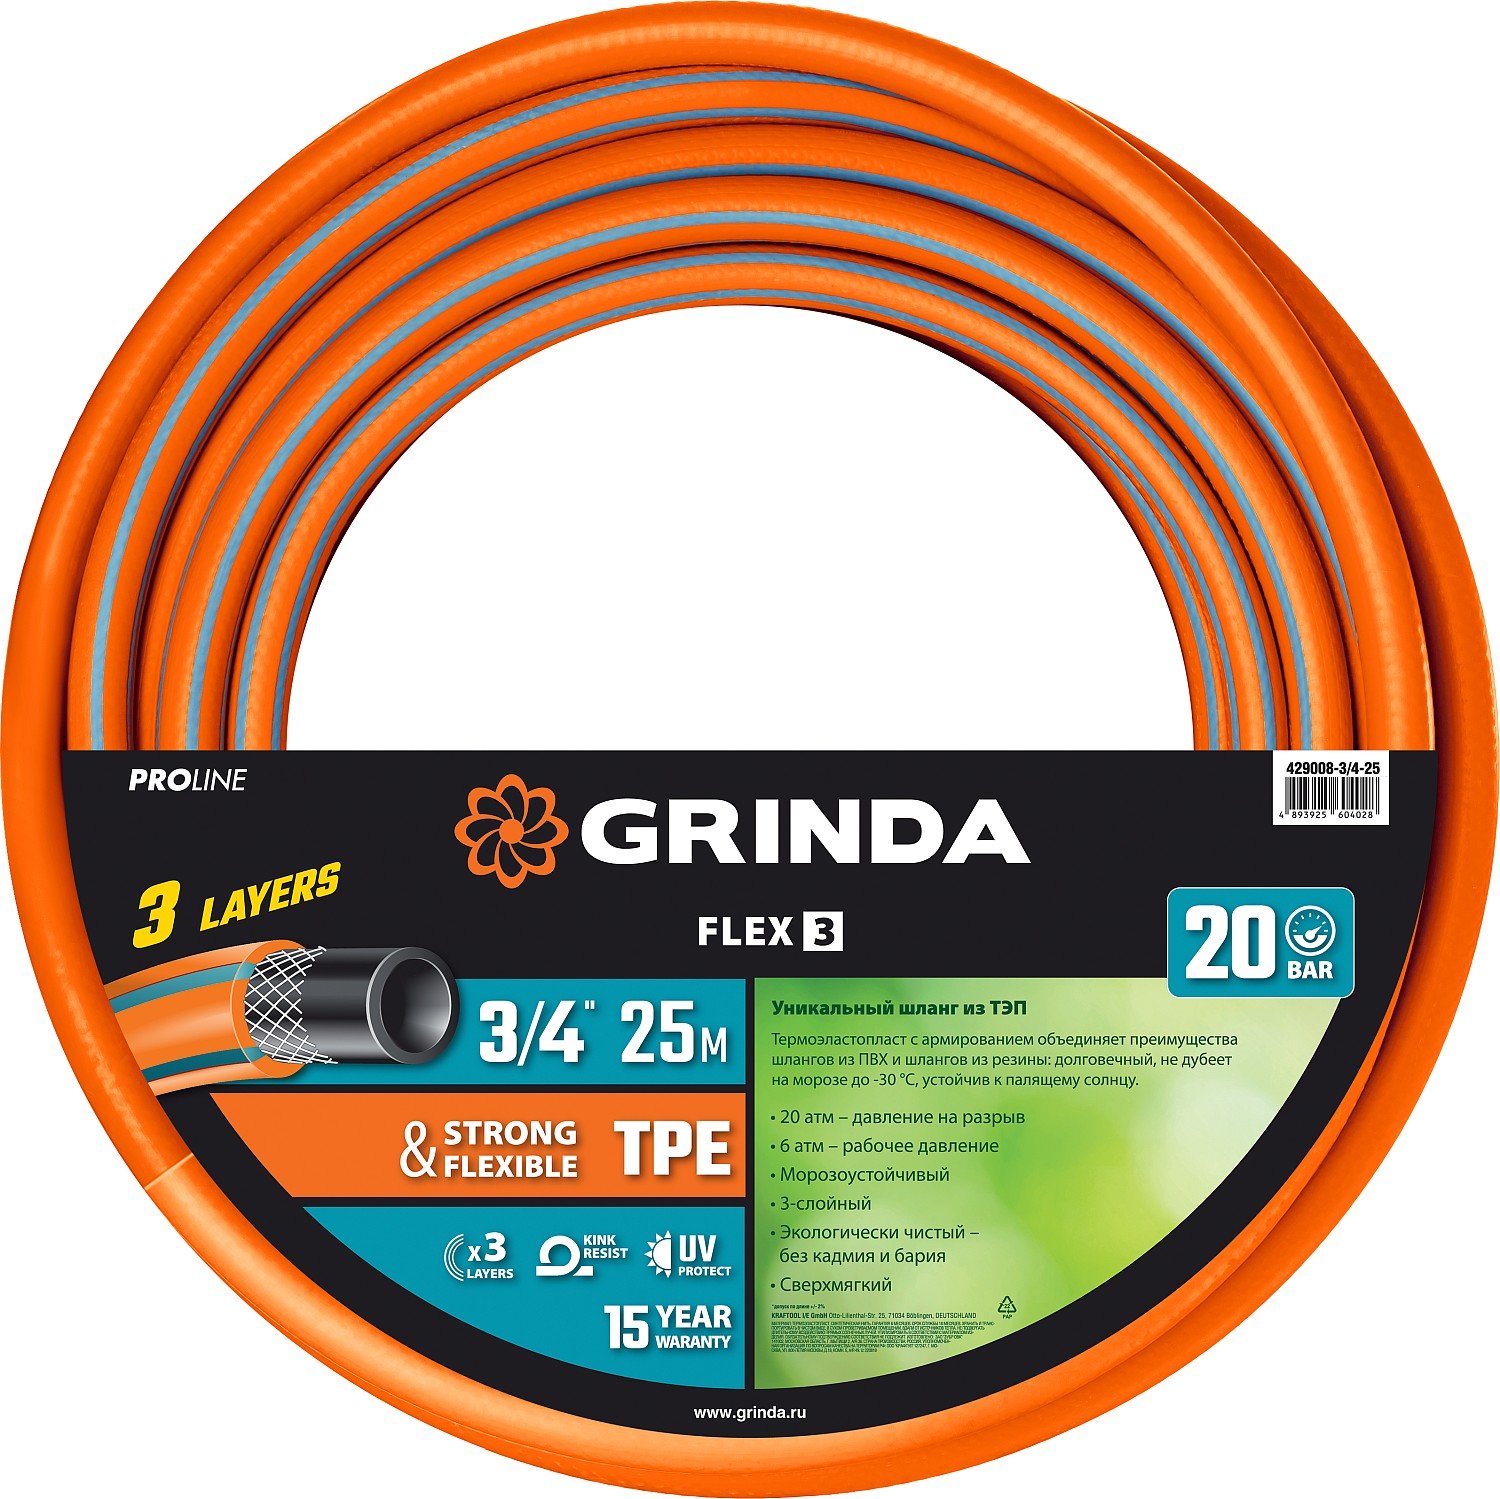   GRINDA PROLine FLEX 3 3 4 25  20      (429008-3 4-25)